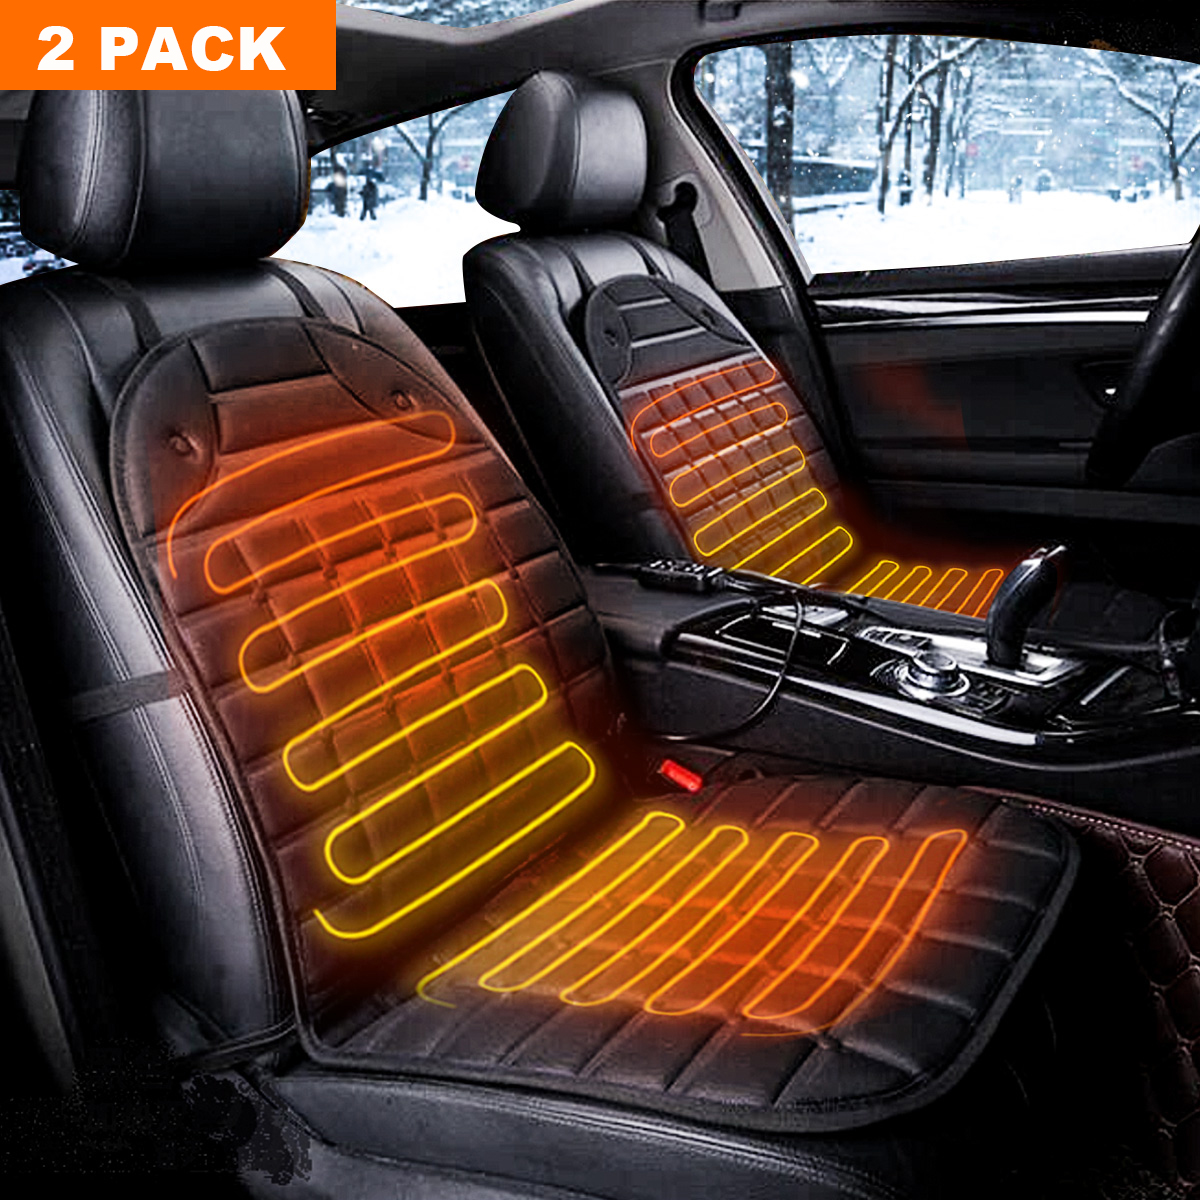 Vvciic Car Seat Heated Car Heated Seat Cushion Warmer Car Heated Seat Cushion Heating Pad Cover Hot Warmer 